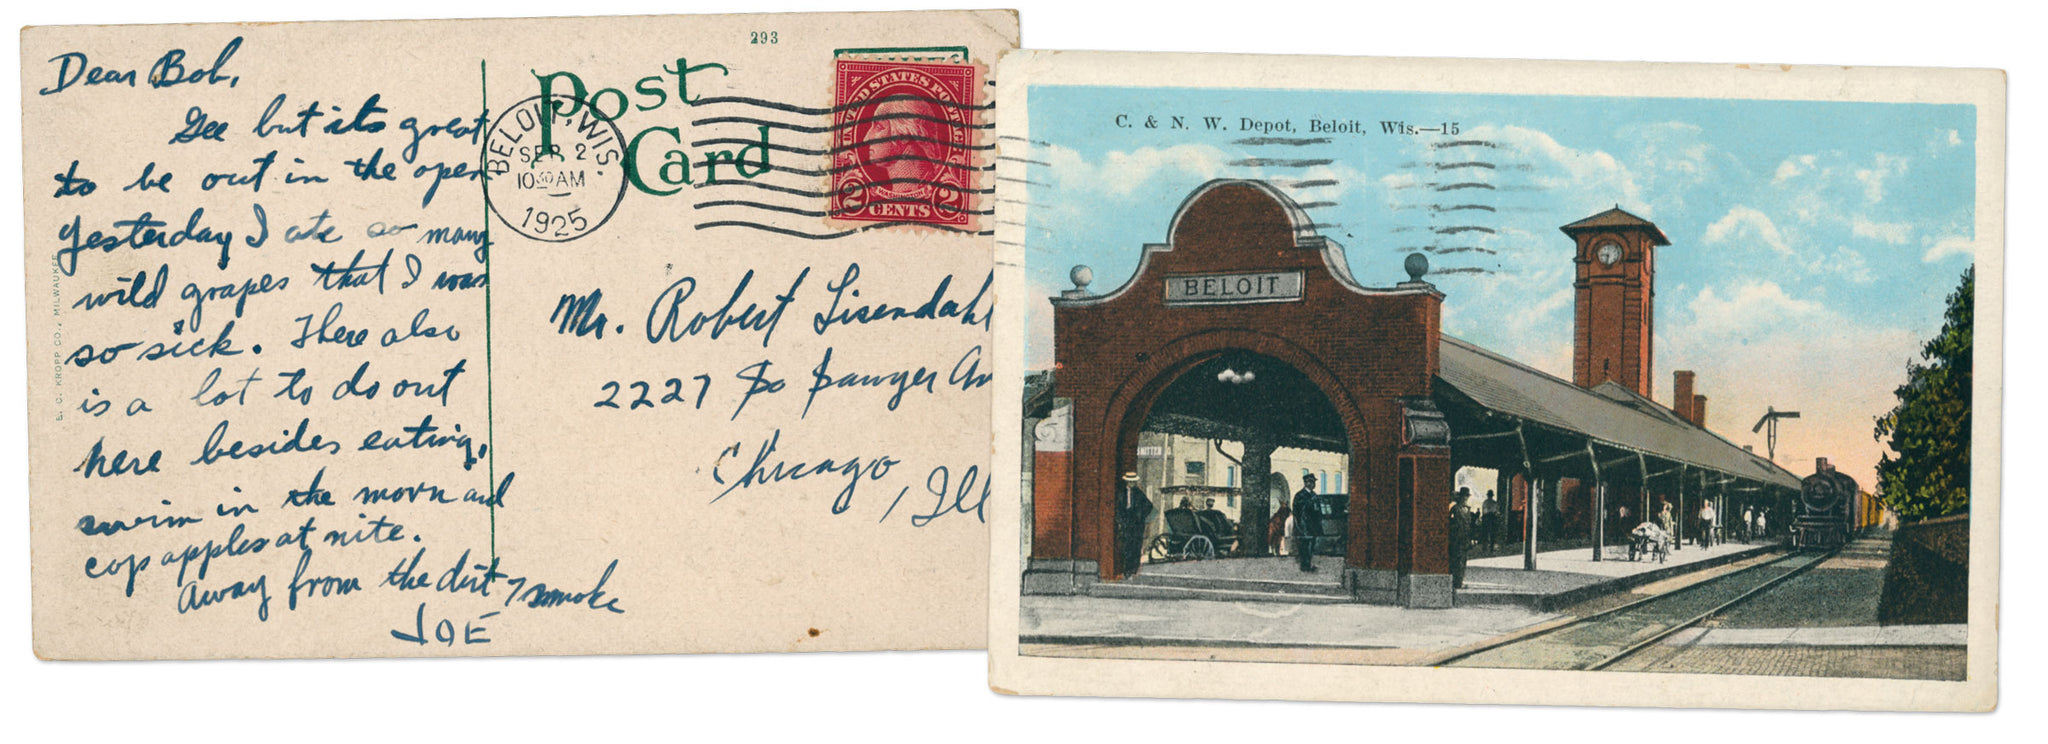 Chicago and North Western train depot in Beloit. -- Courtesy of Anne Liesendahl